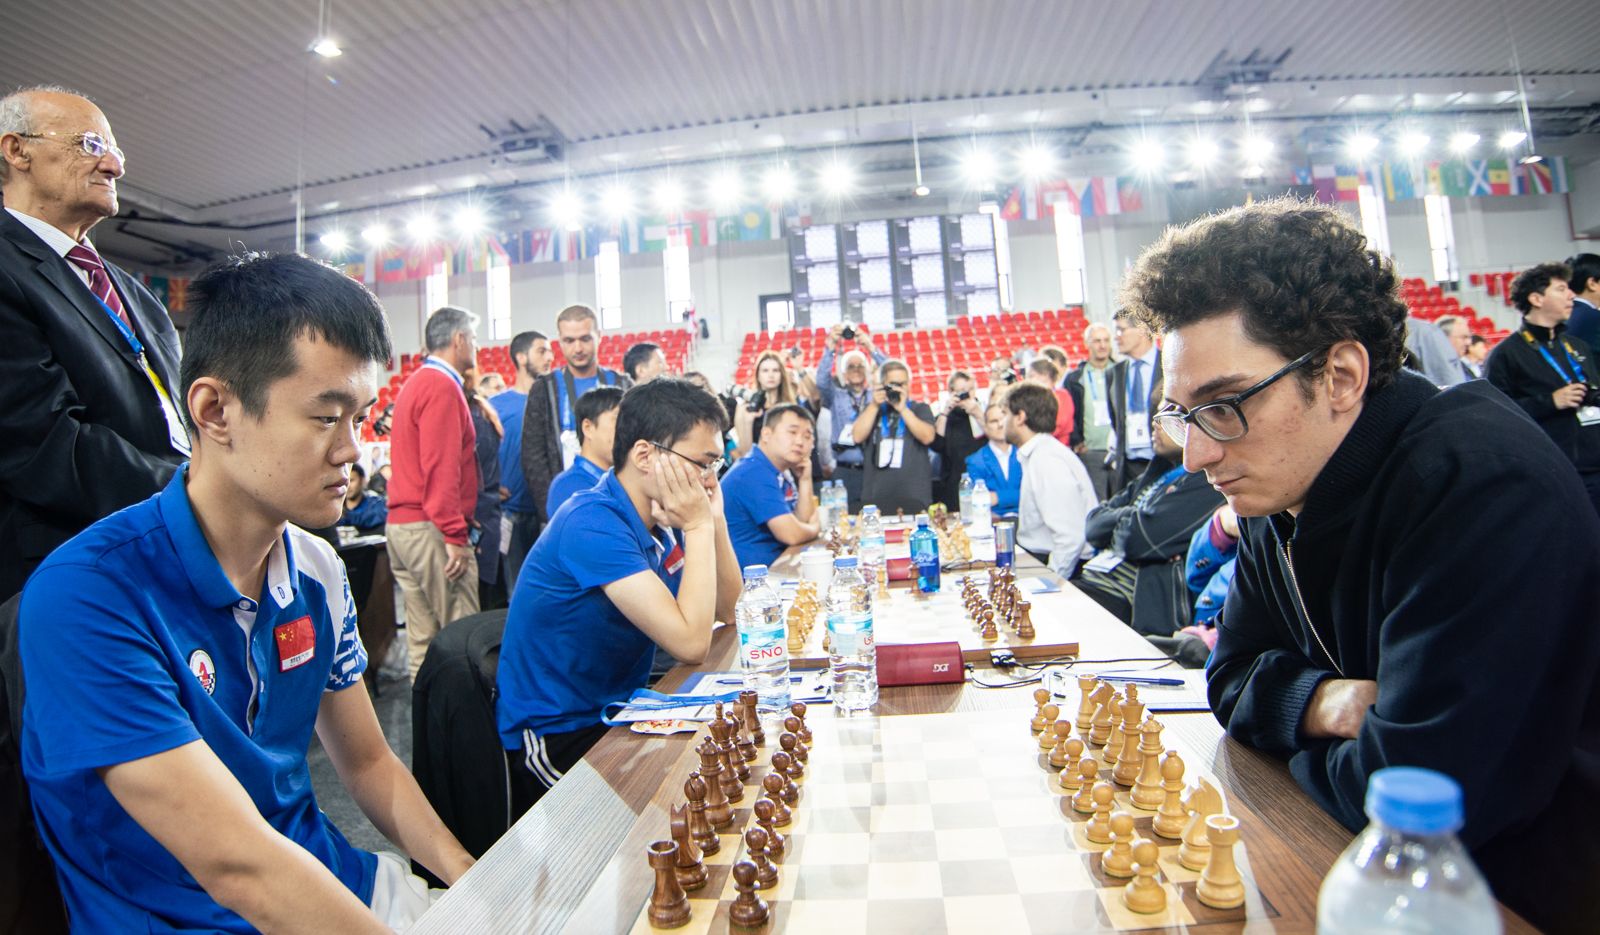 Chinenses dominam pódio no Mundial Universitário de Xadrez, se